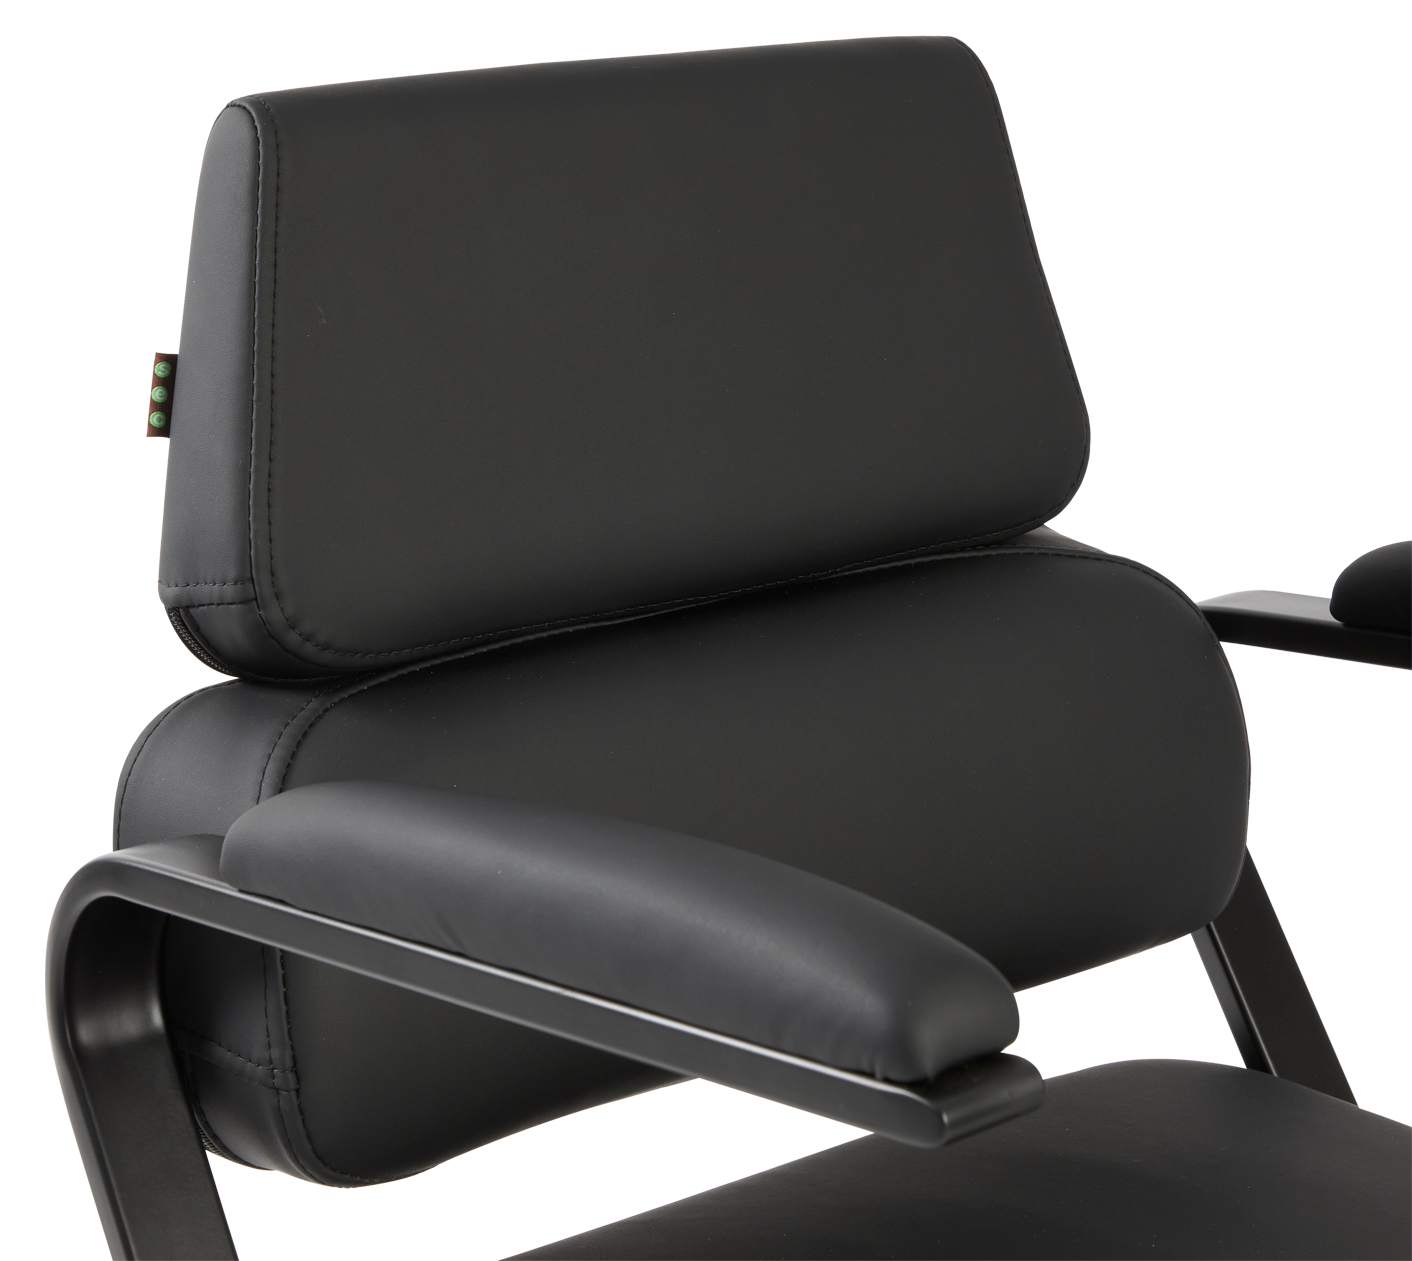 The Iris Salon Styling Chair - Midnight Black by SEC